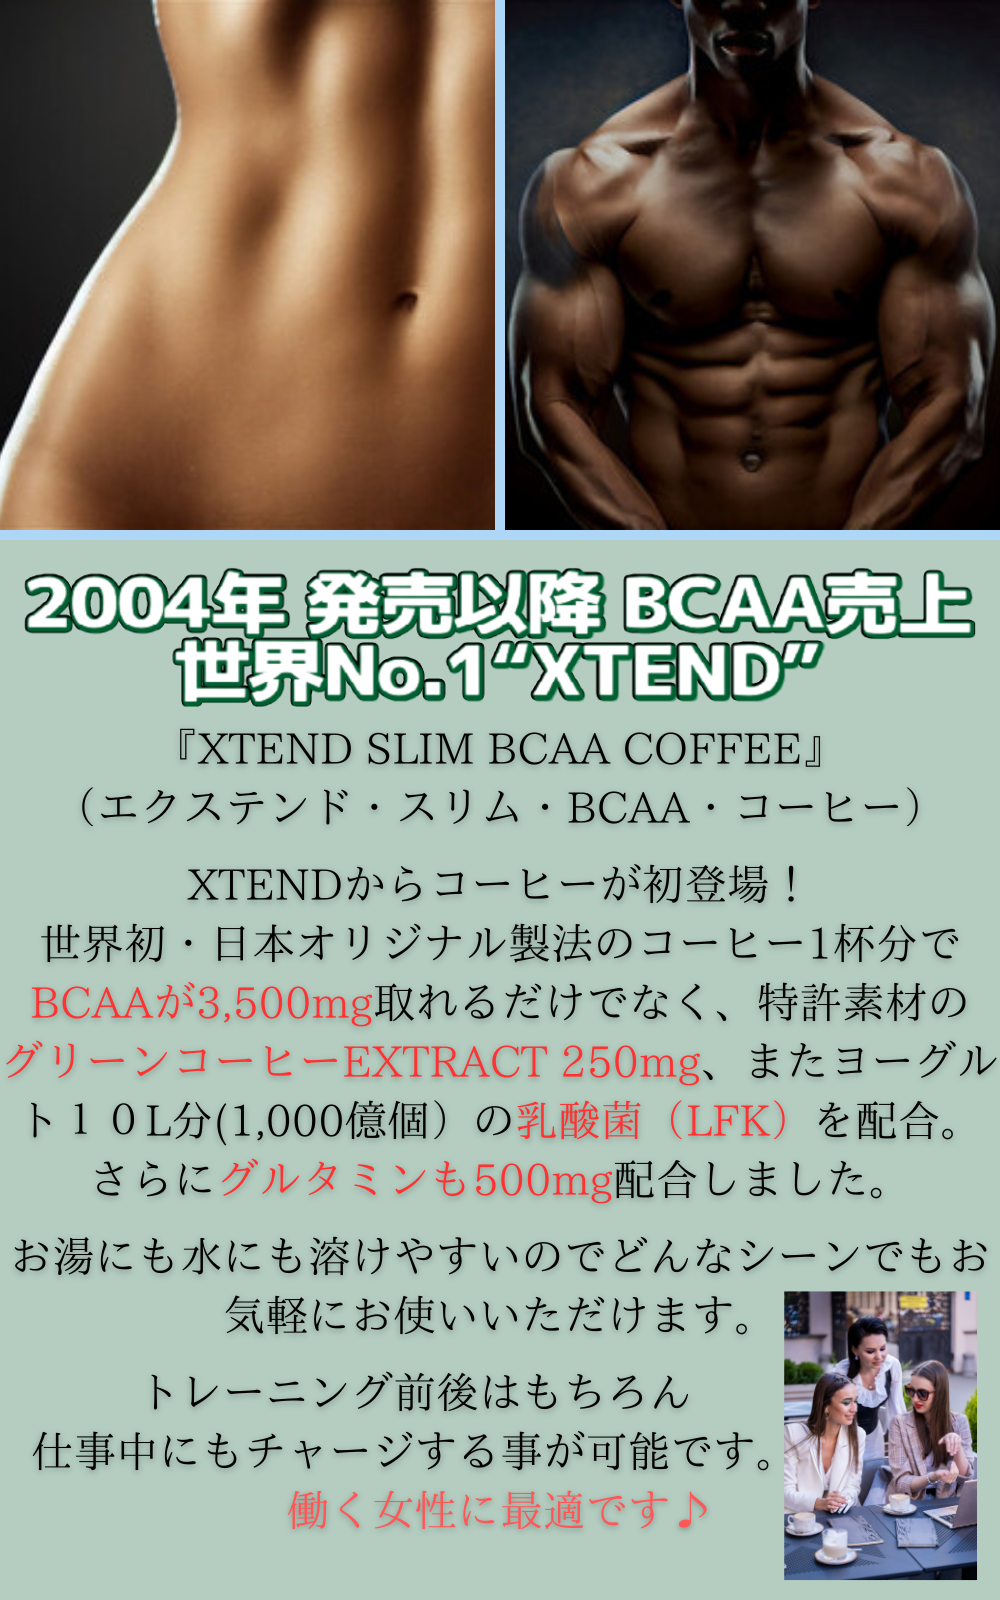 XTEND SLIM BCAA COFFEE DECAF 30本セット (エクステンド スリム BCAA コーヒー デカフェ)